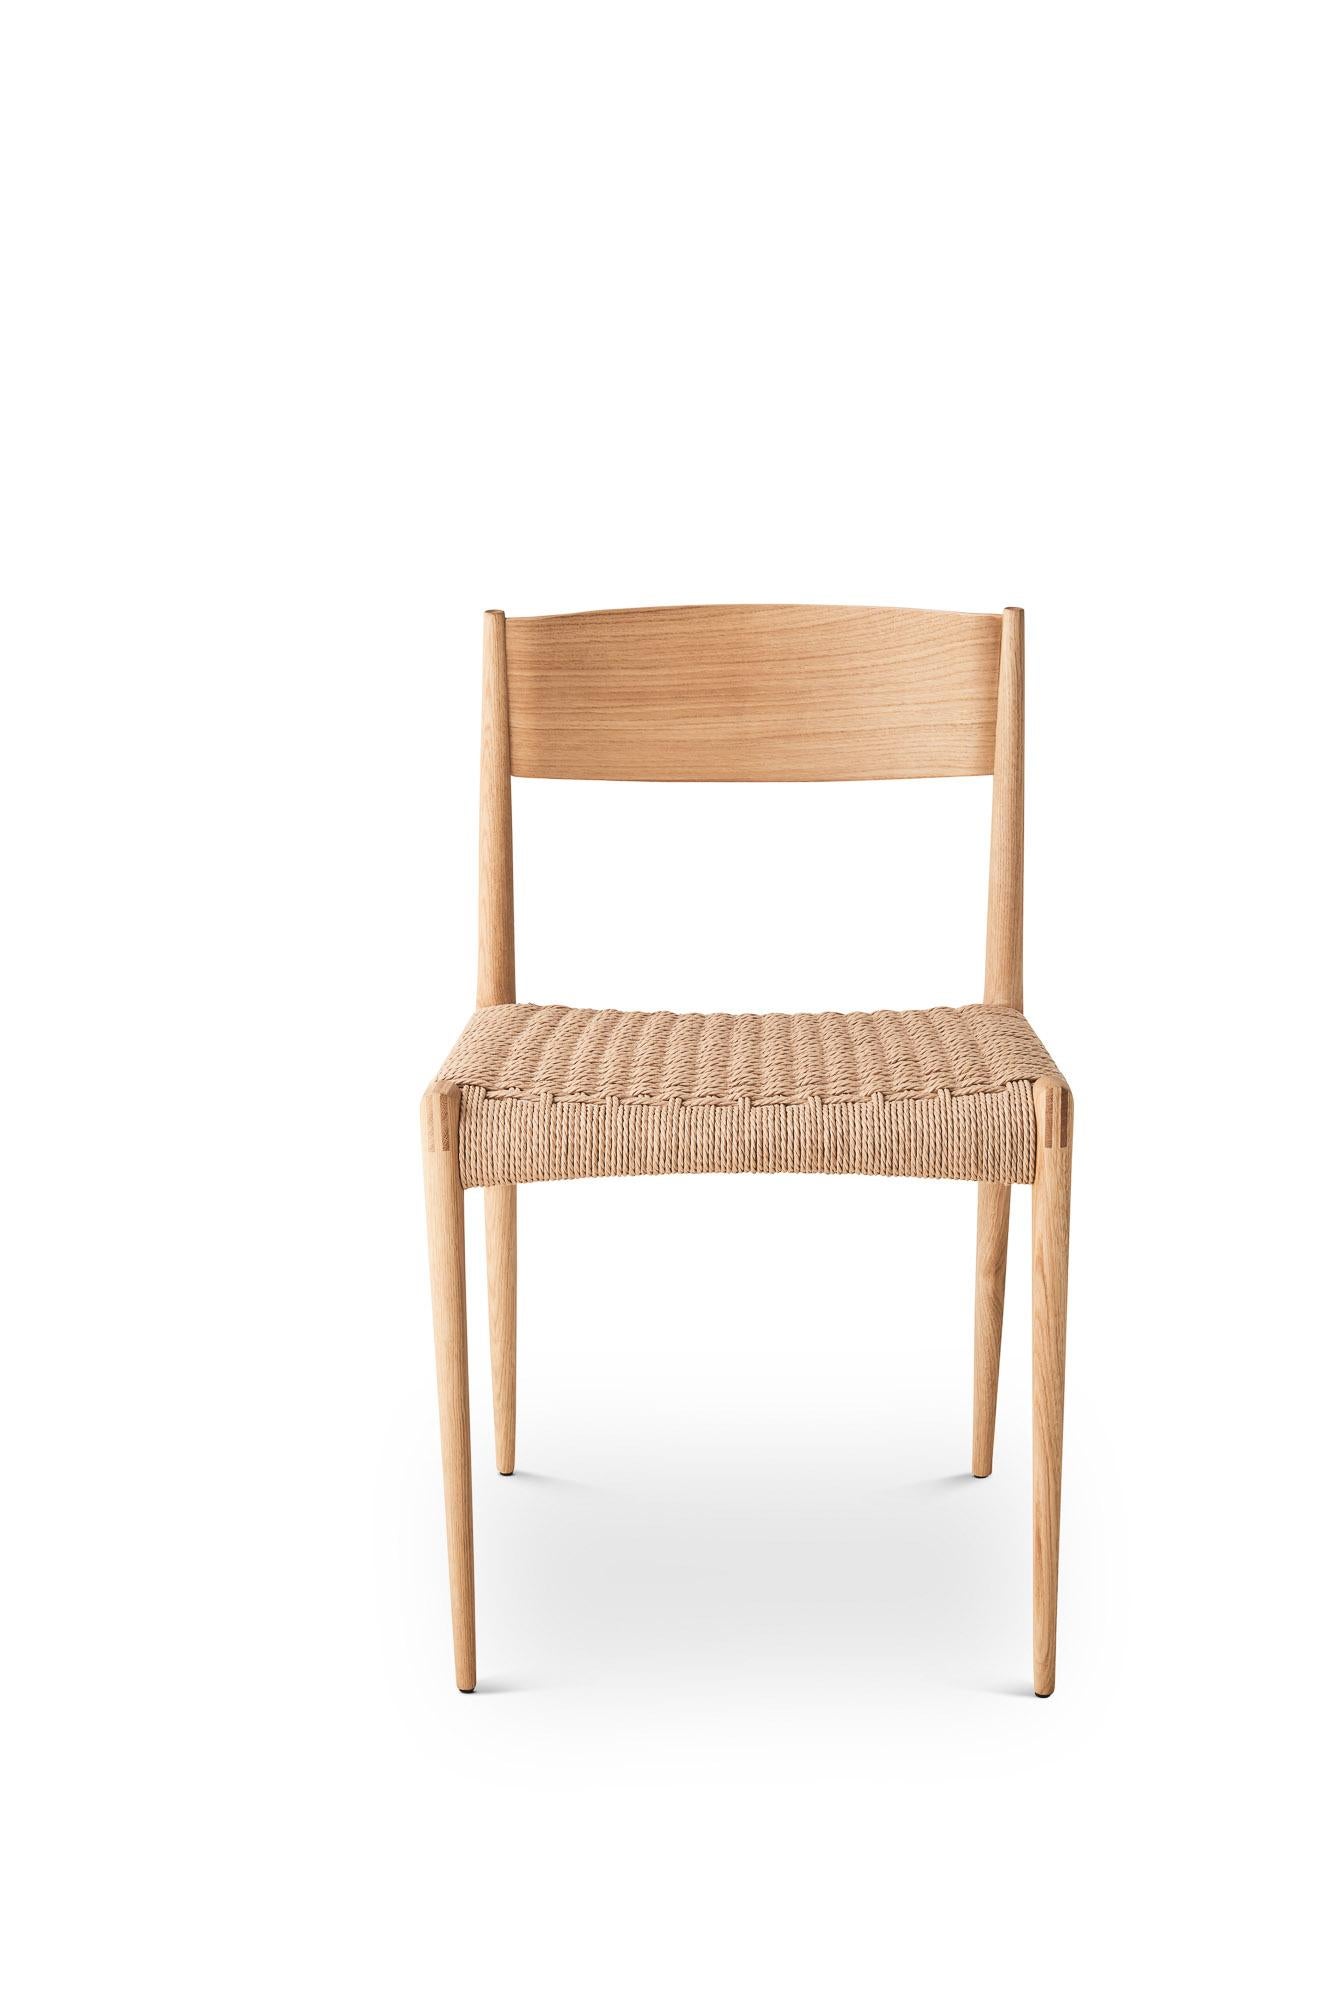 Scandinavian Modern PIA Chair by Poul Cadovius - Light Oak For Sale